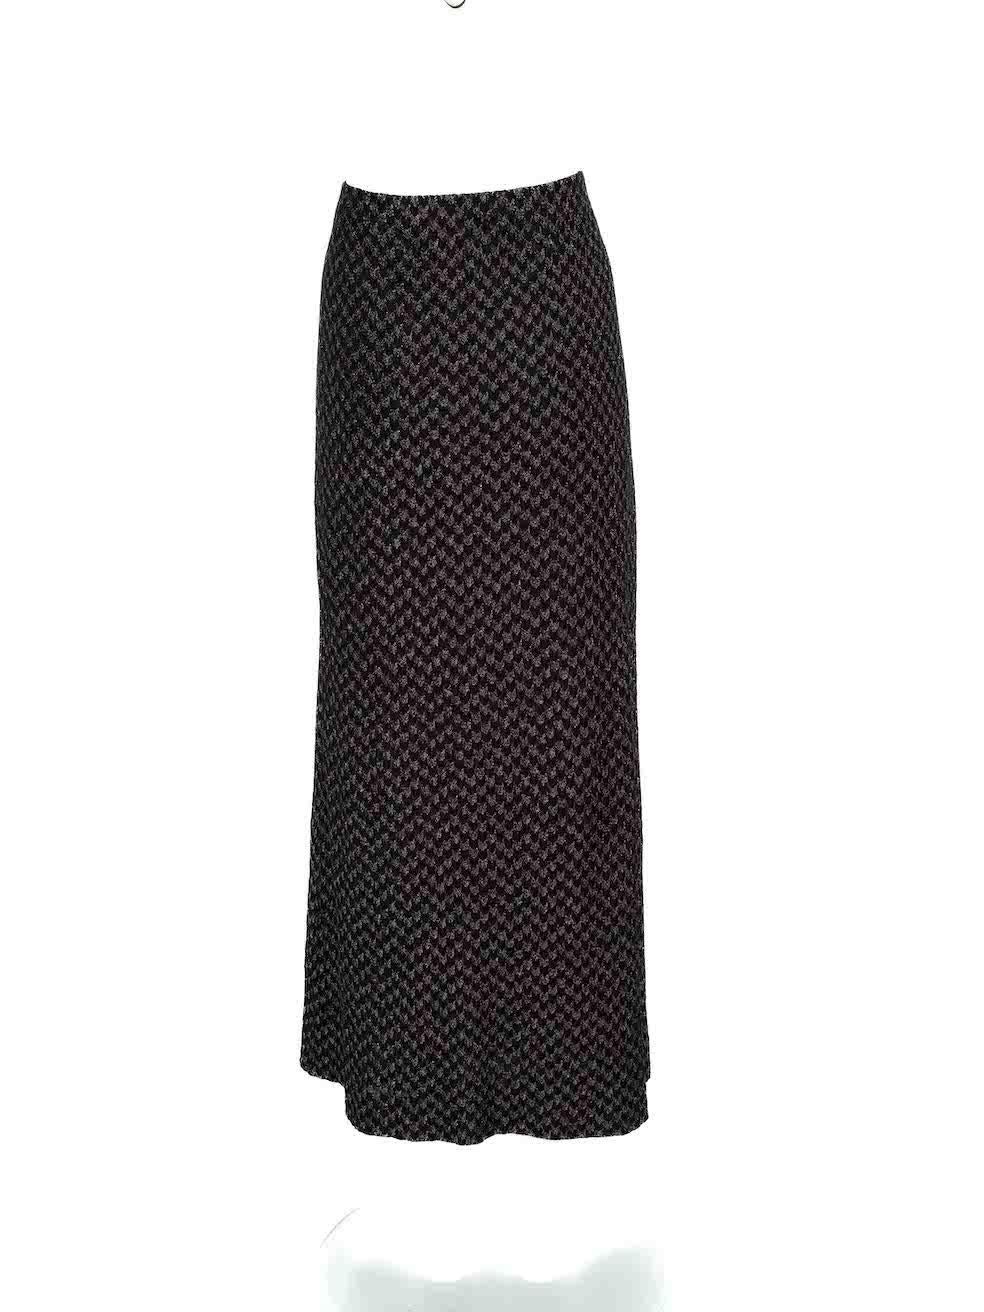 Missoni Black Metallic Knit Midi Skirt Size XL In Good Condition For Sale In London, GB